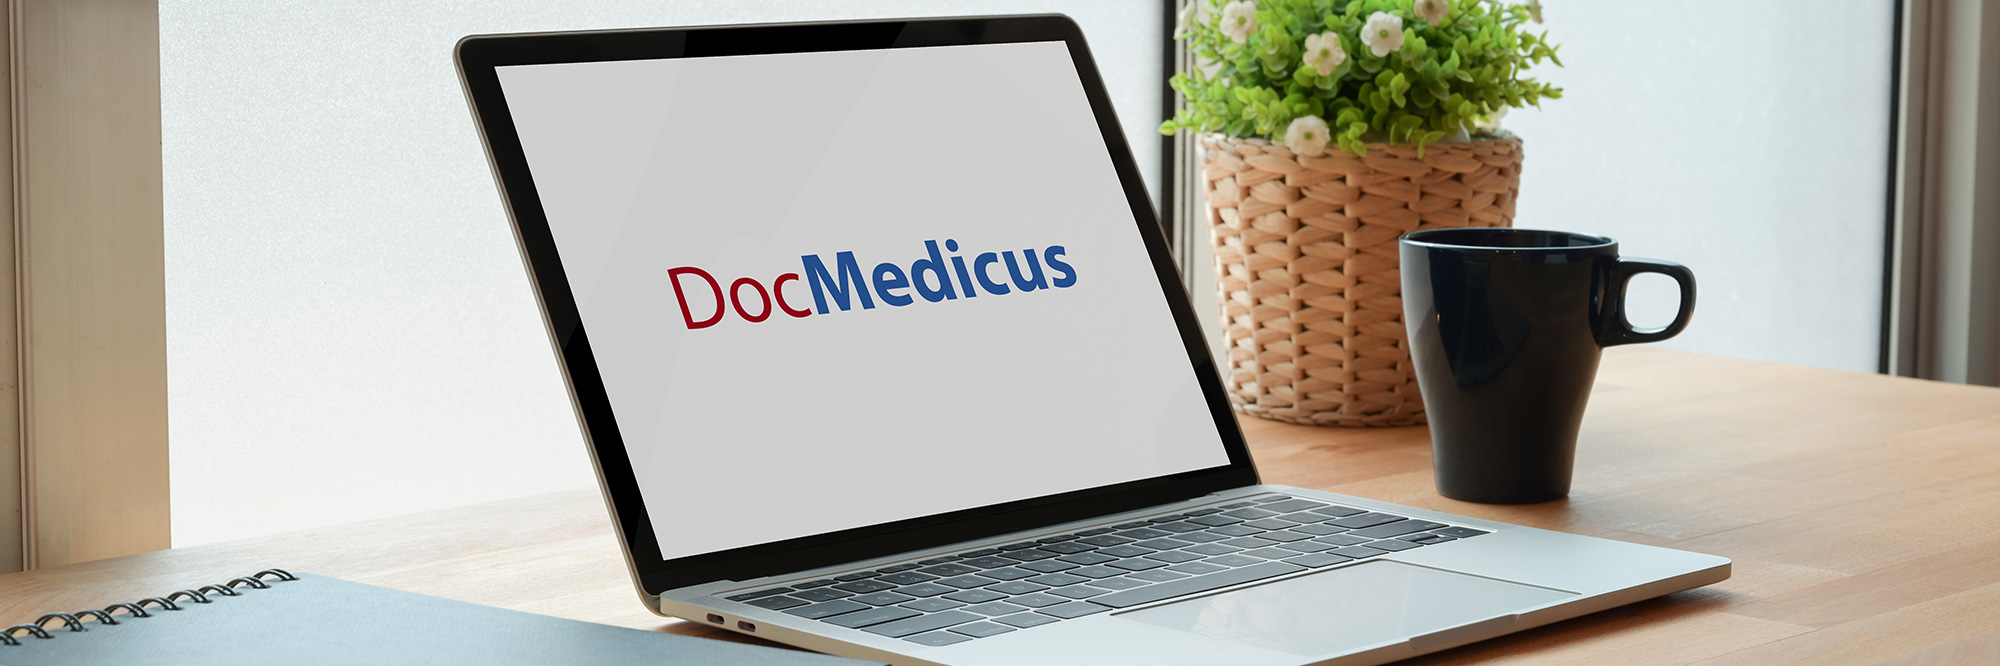  DocMedicus-Expertensystem-iStock-1171623982.jpg